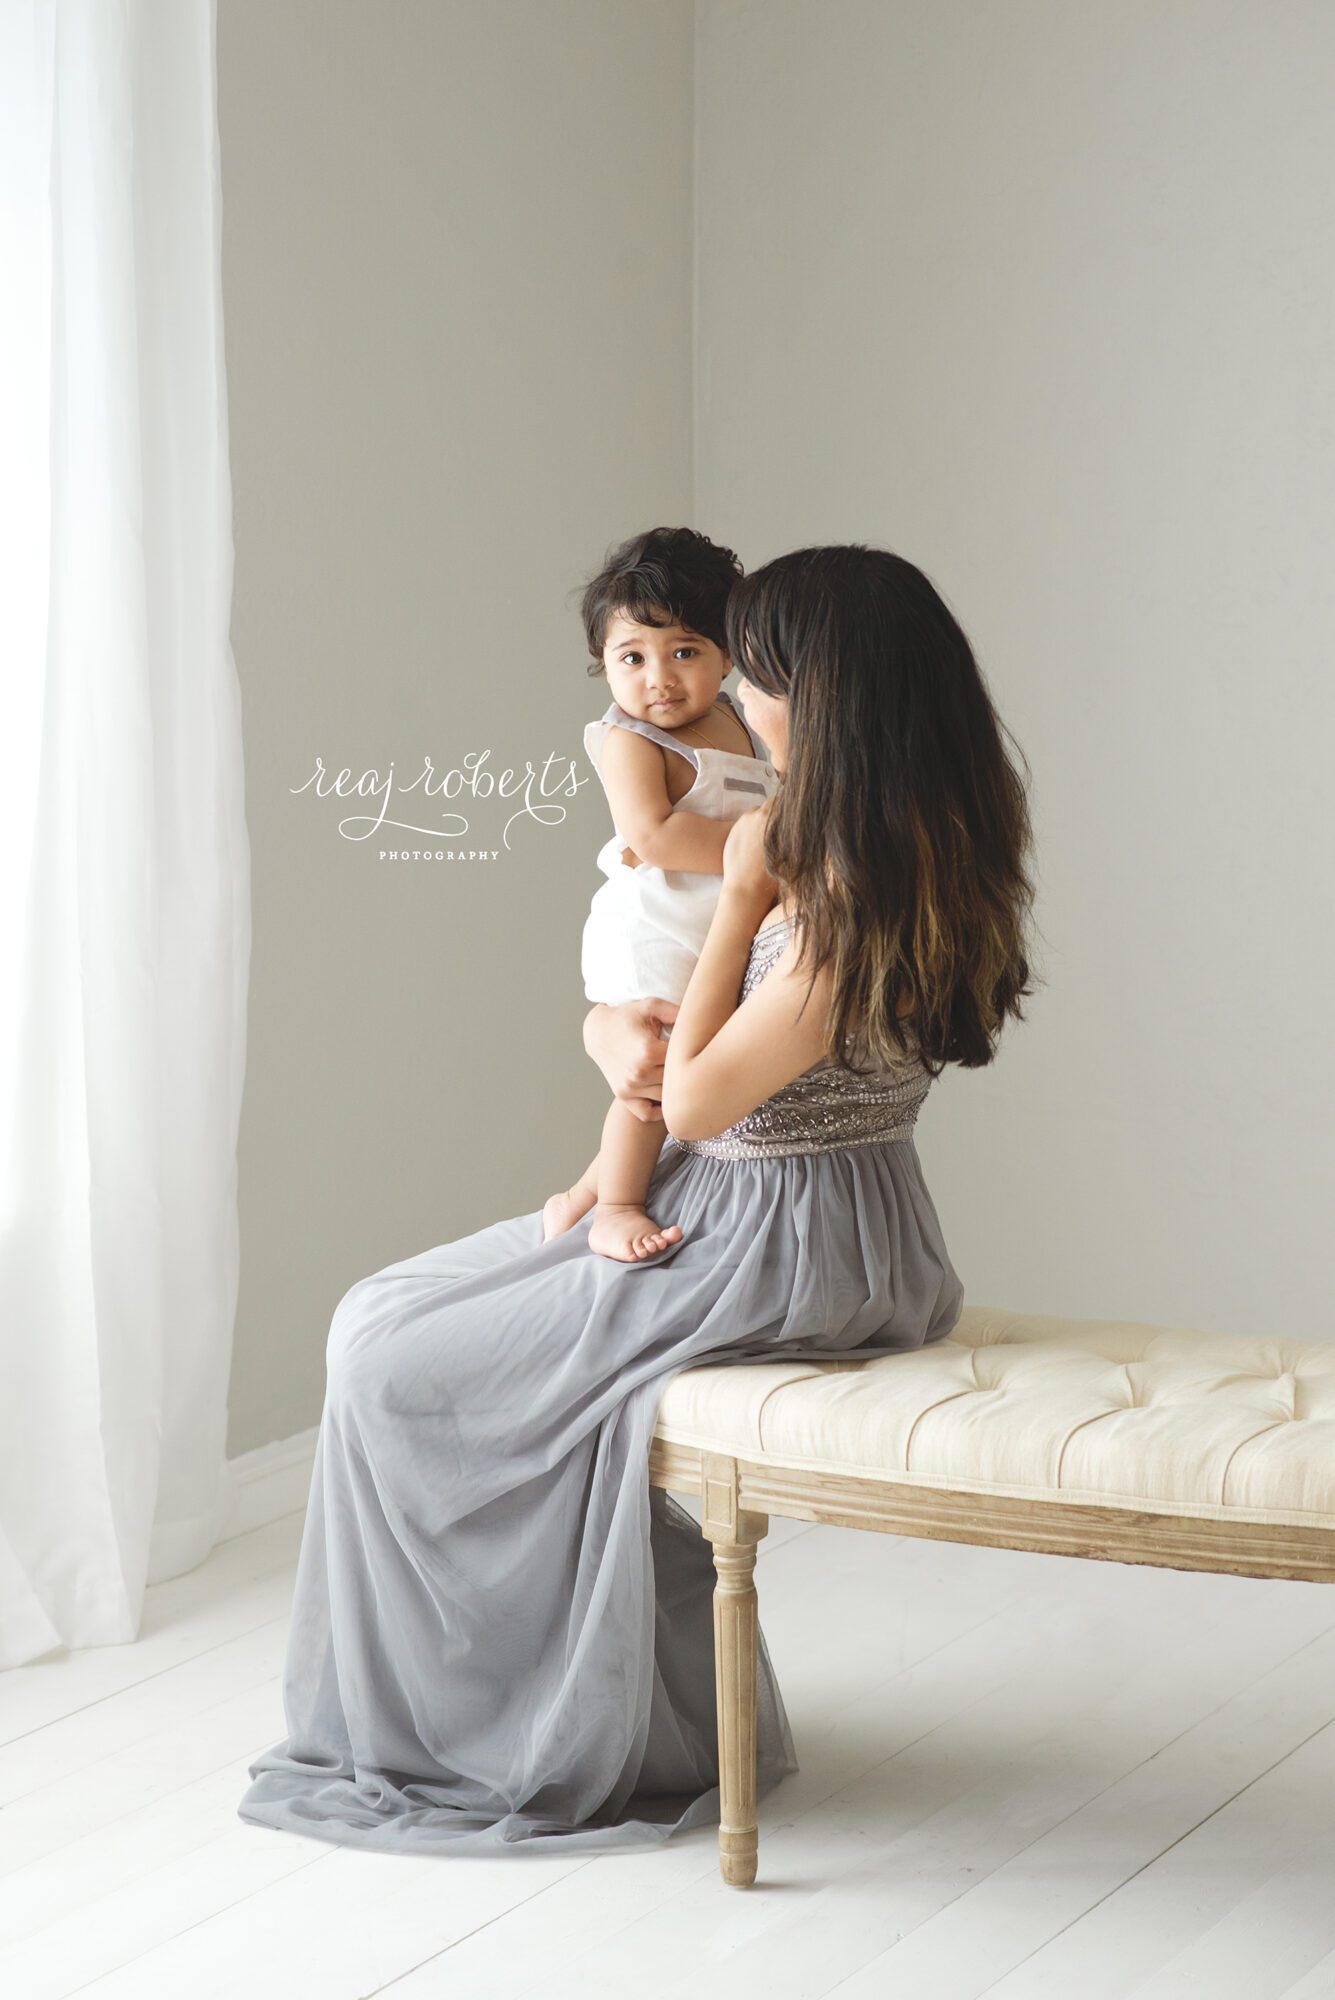 Chandler Gilbert Motherhood Photographer | Reaj Roberts Photography